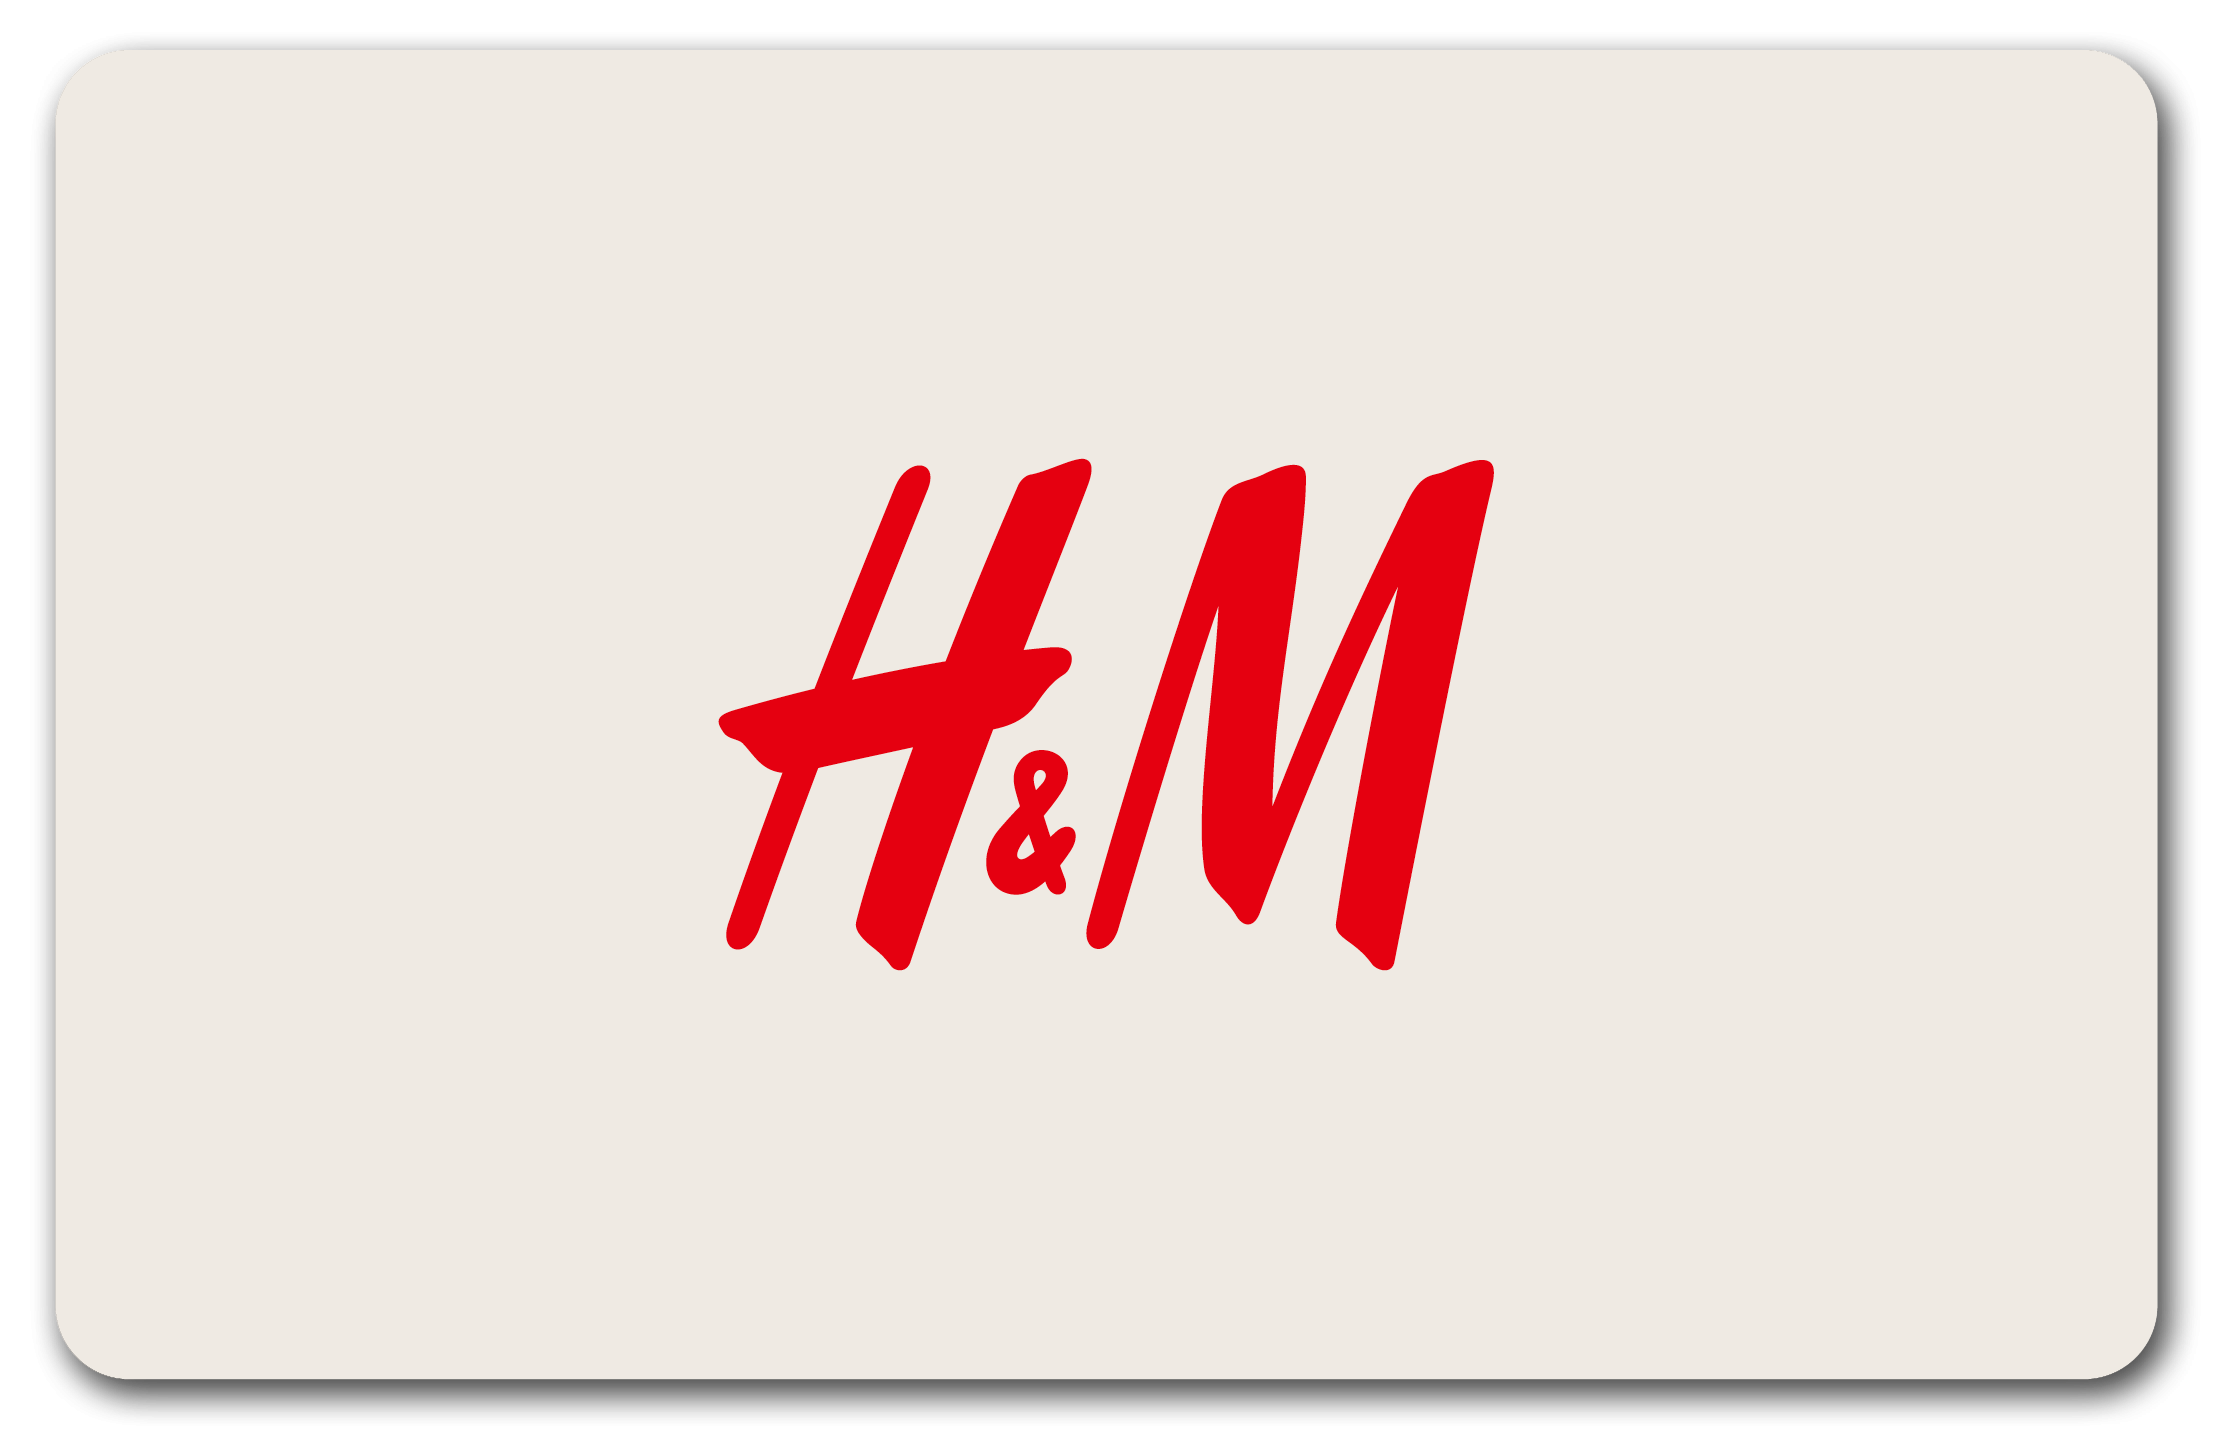 H&M Épinay-sur-Seine